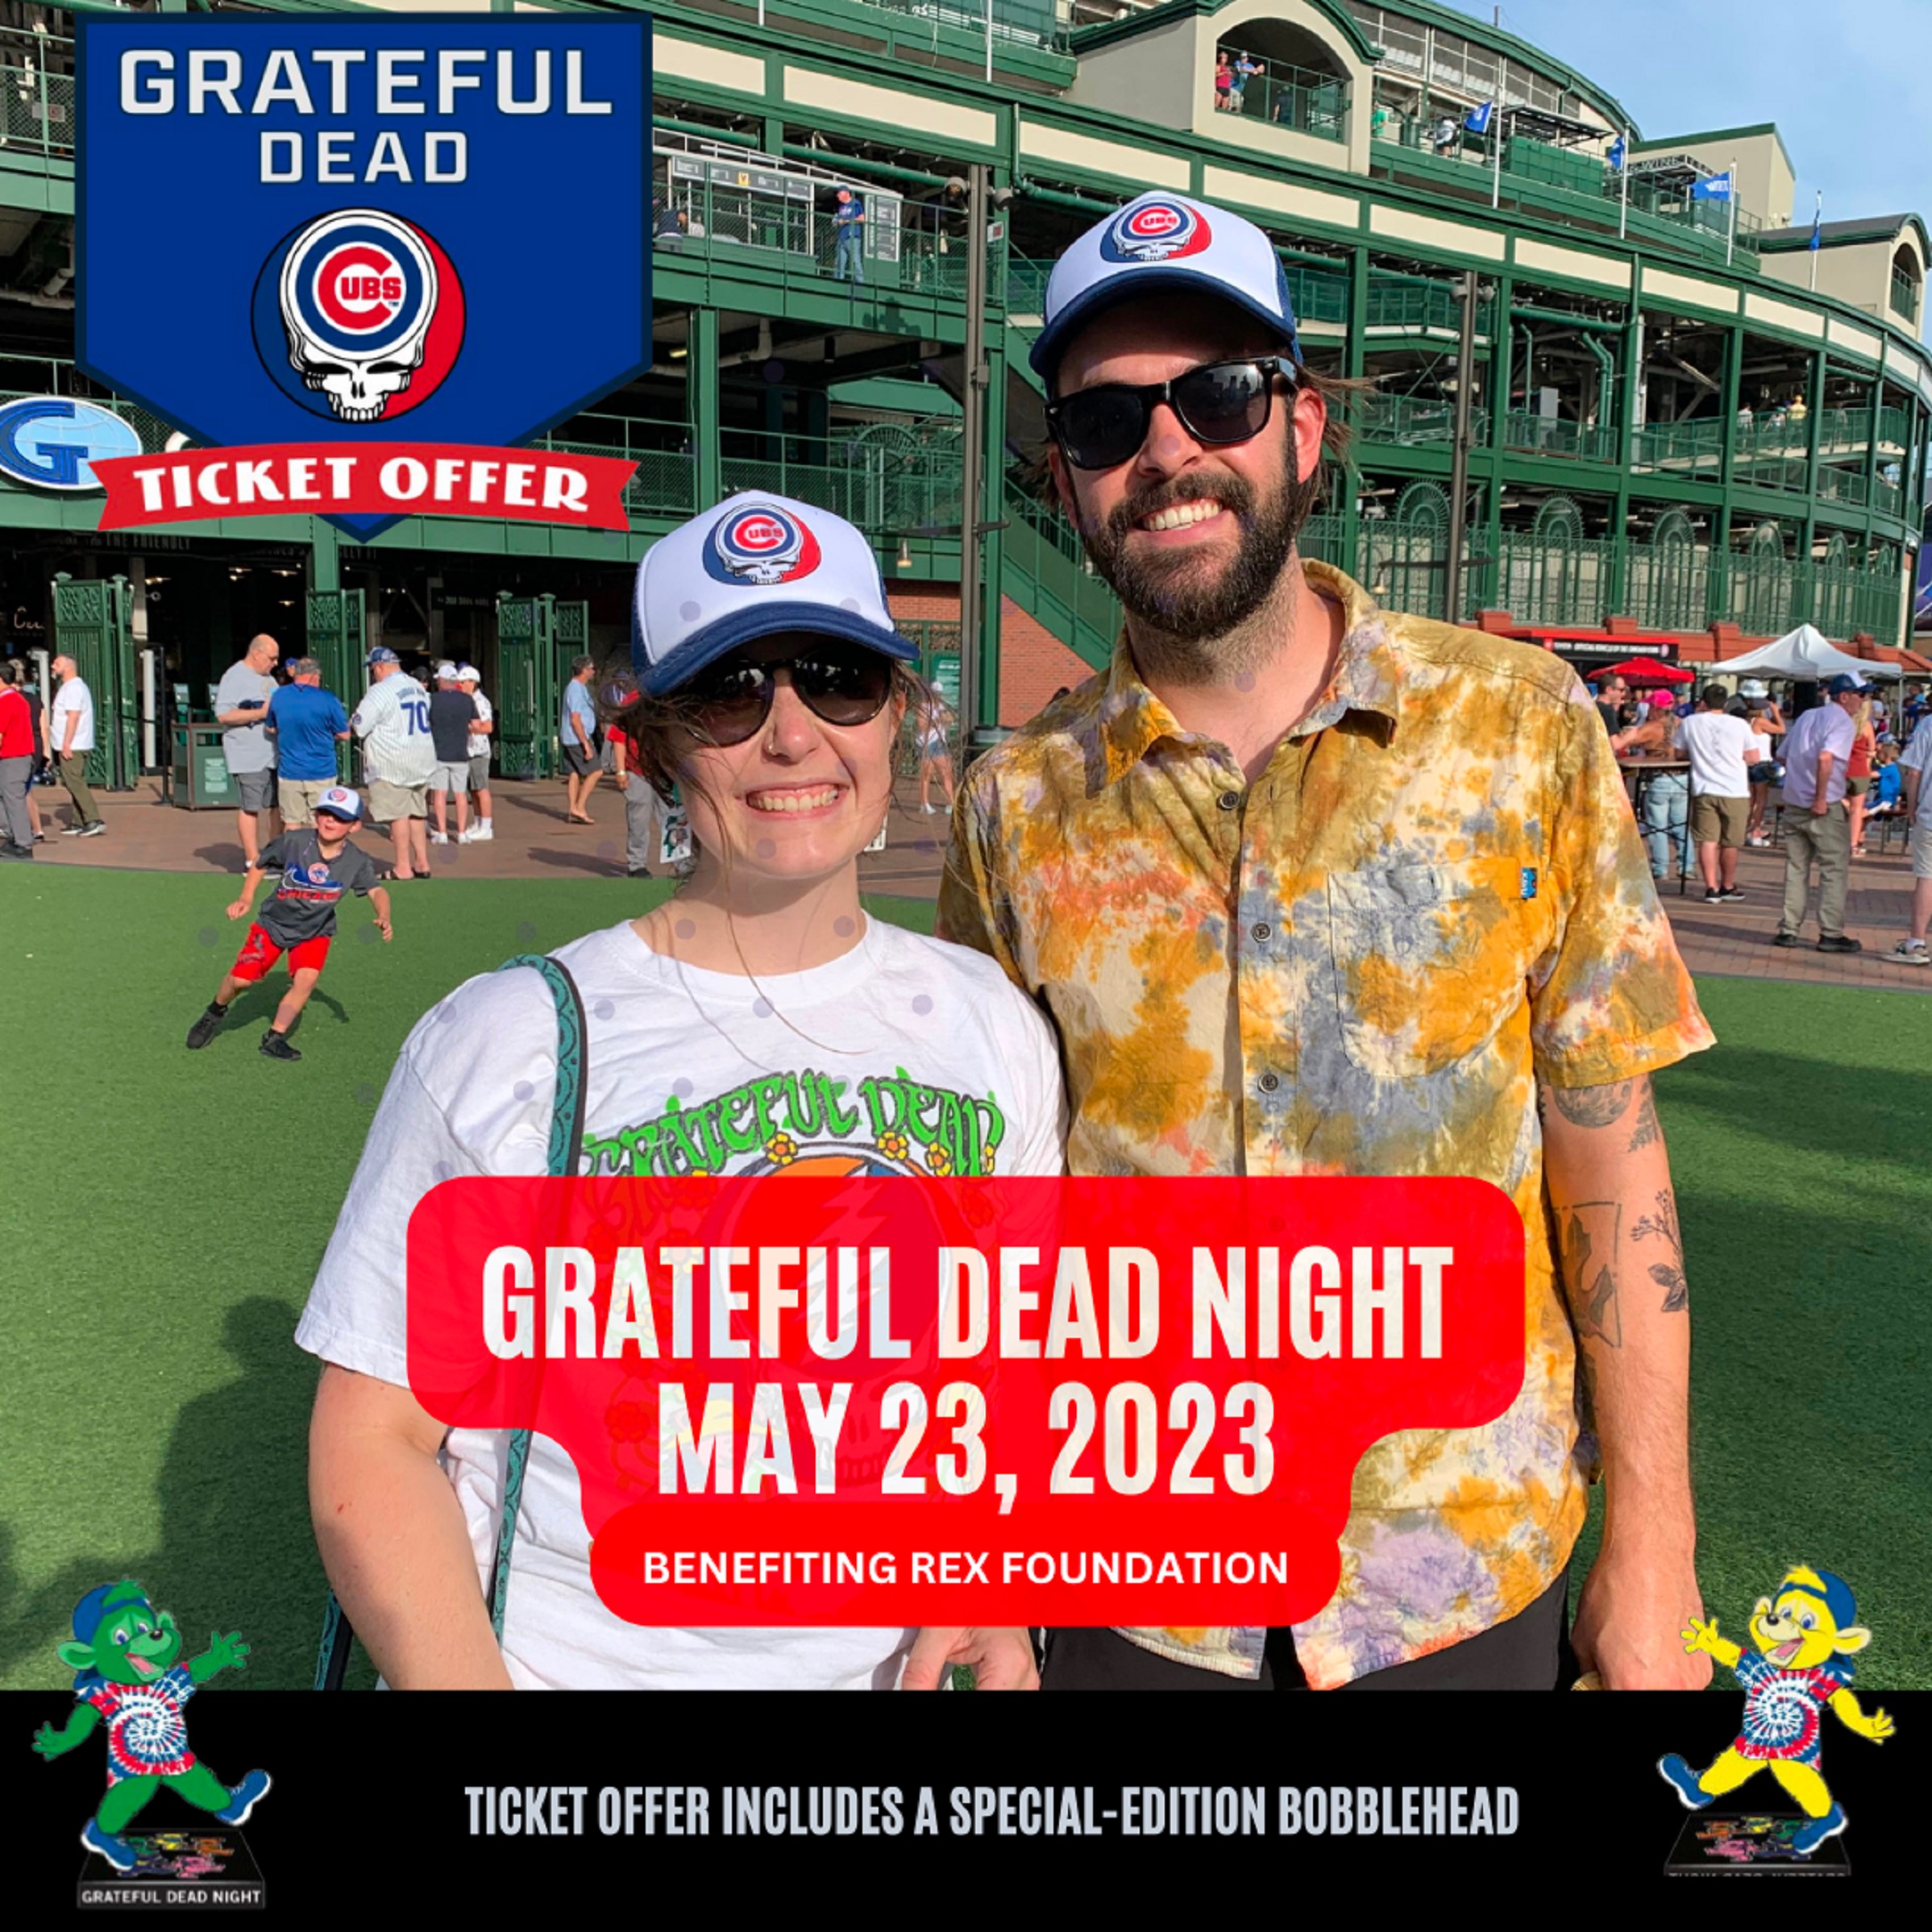 Grateful Dead Night at Wrigley Field tomorrow night!